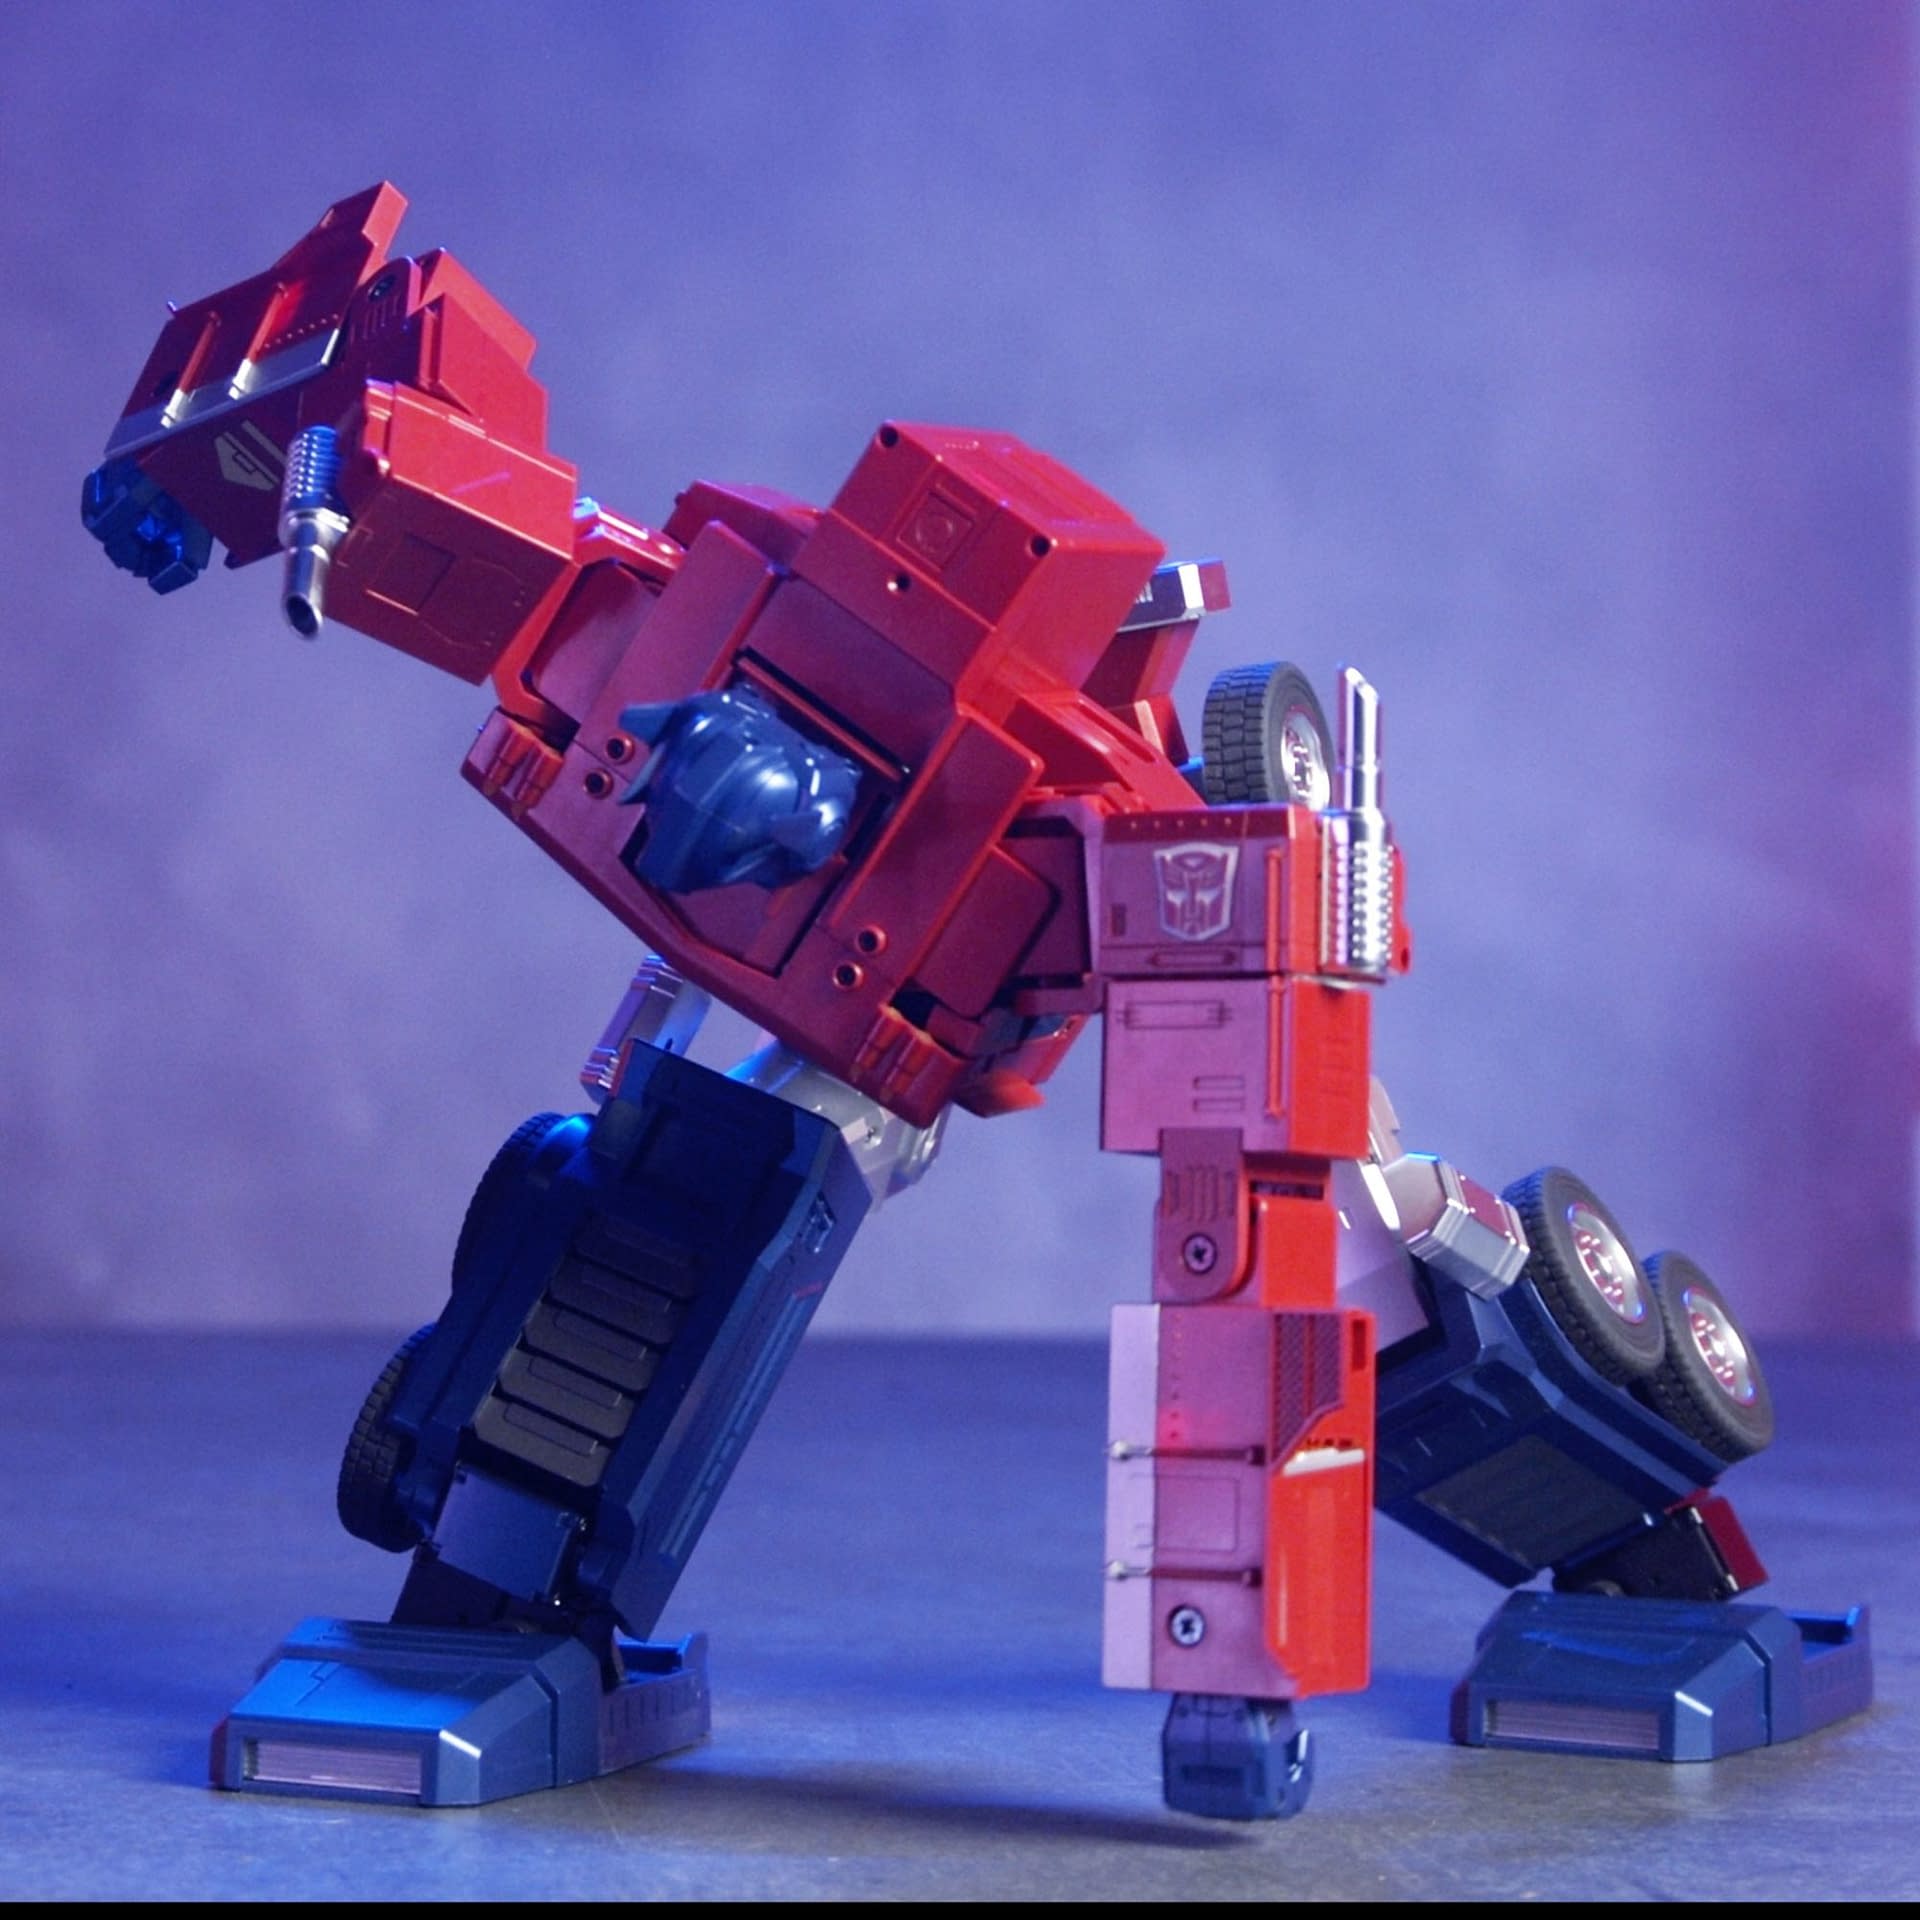 Transformers Optimus Prime Returns to Roboson with Elite Edition Bot